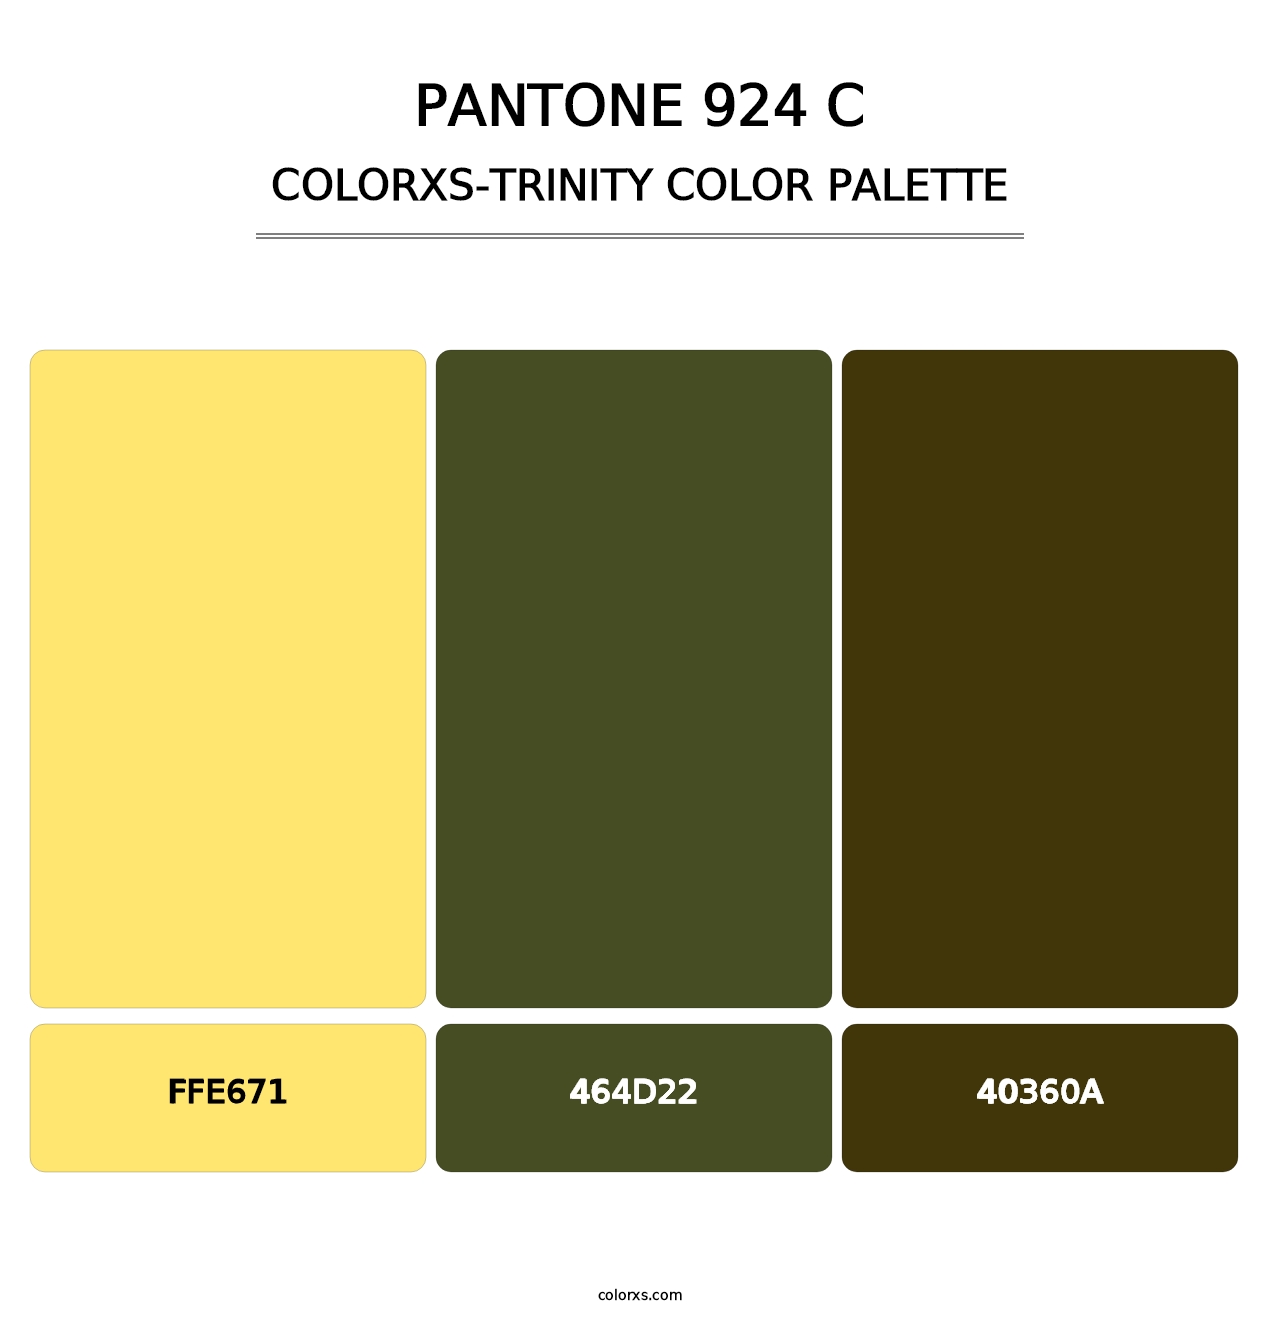 PANTONE 924 C - Colorxs Trinity Palette